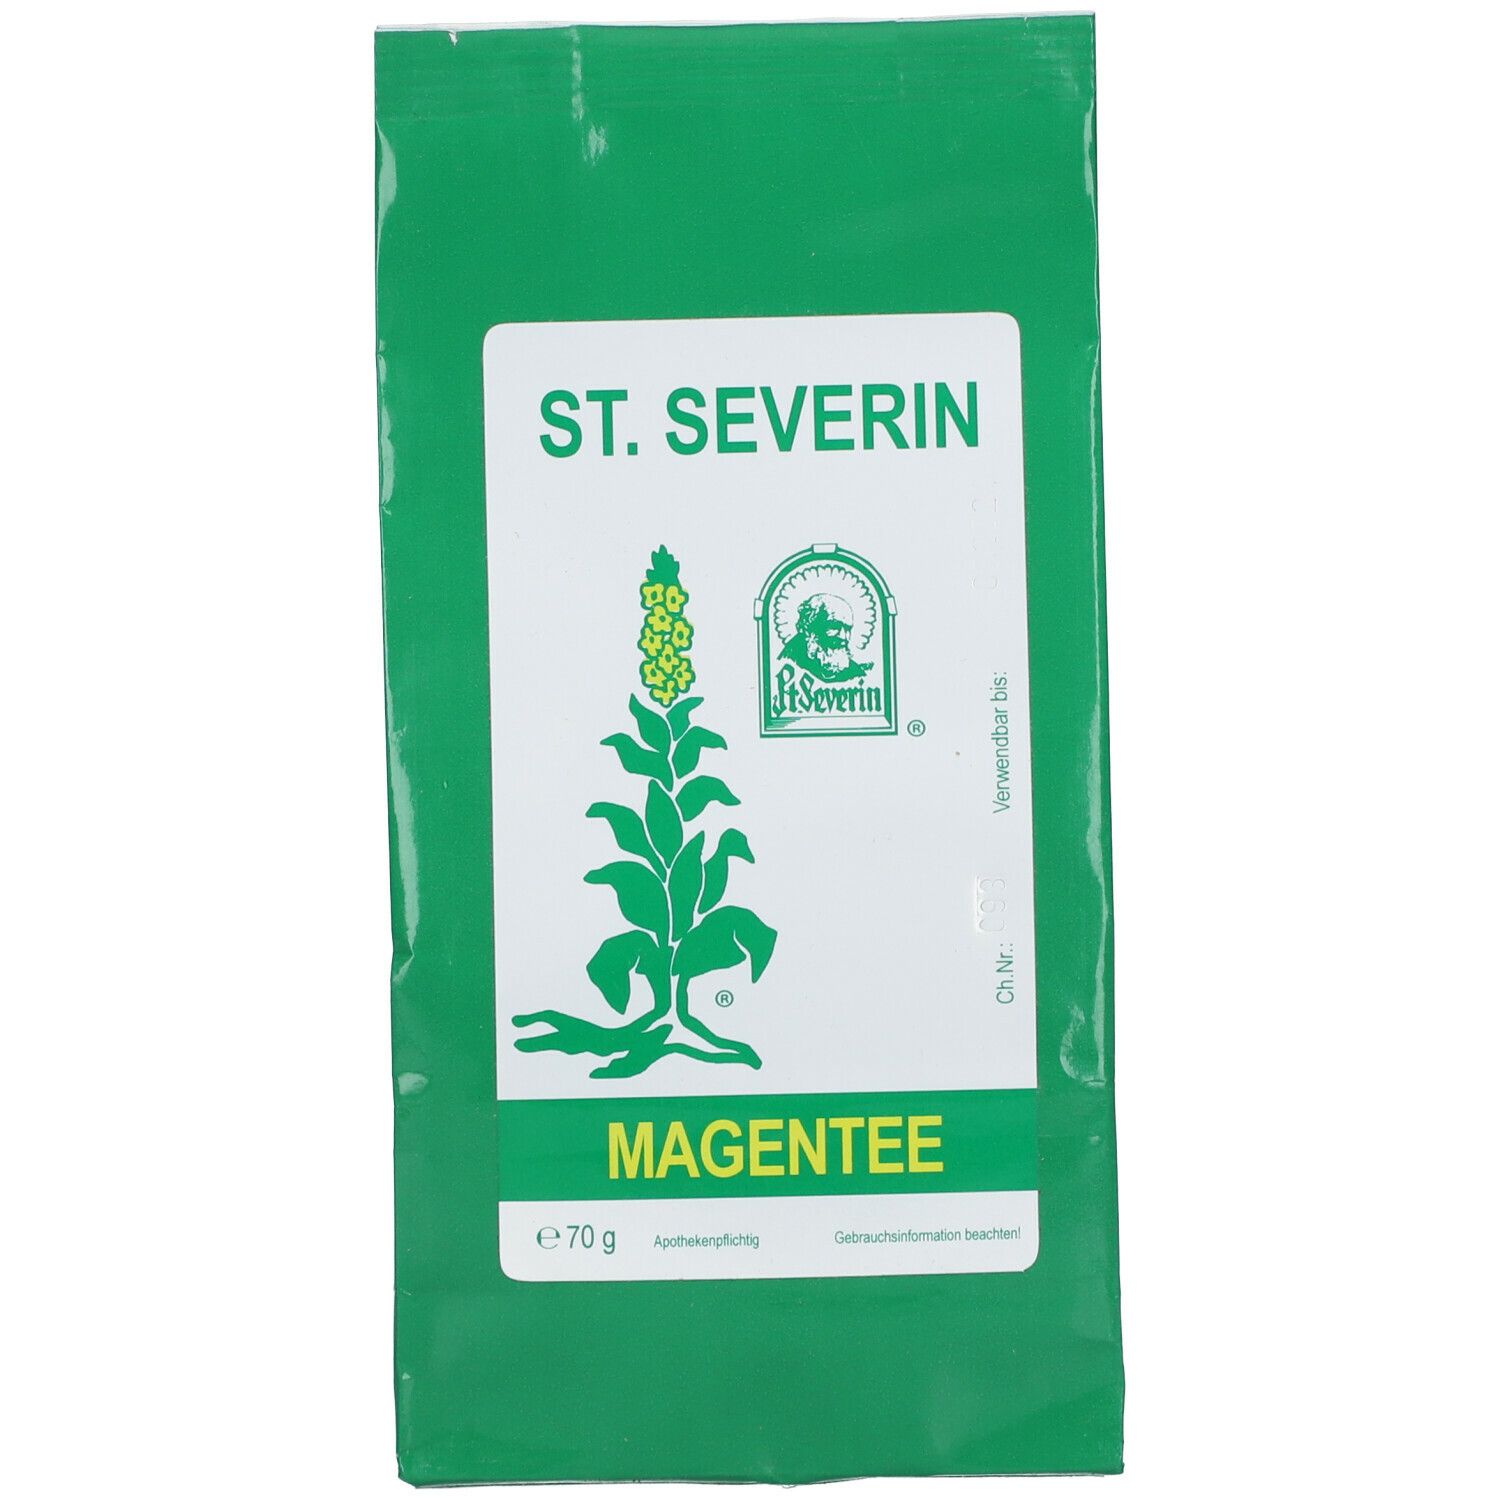 St. Severin Magentee